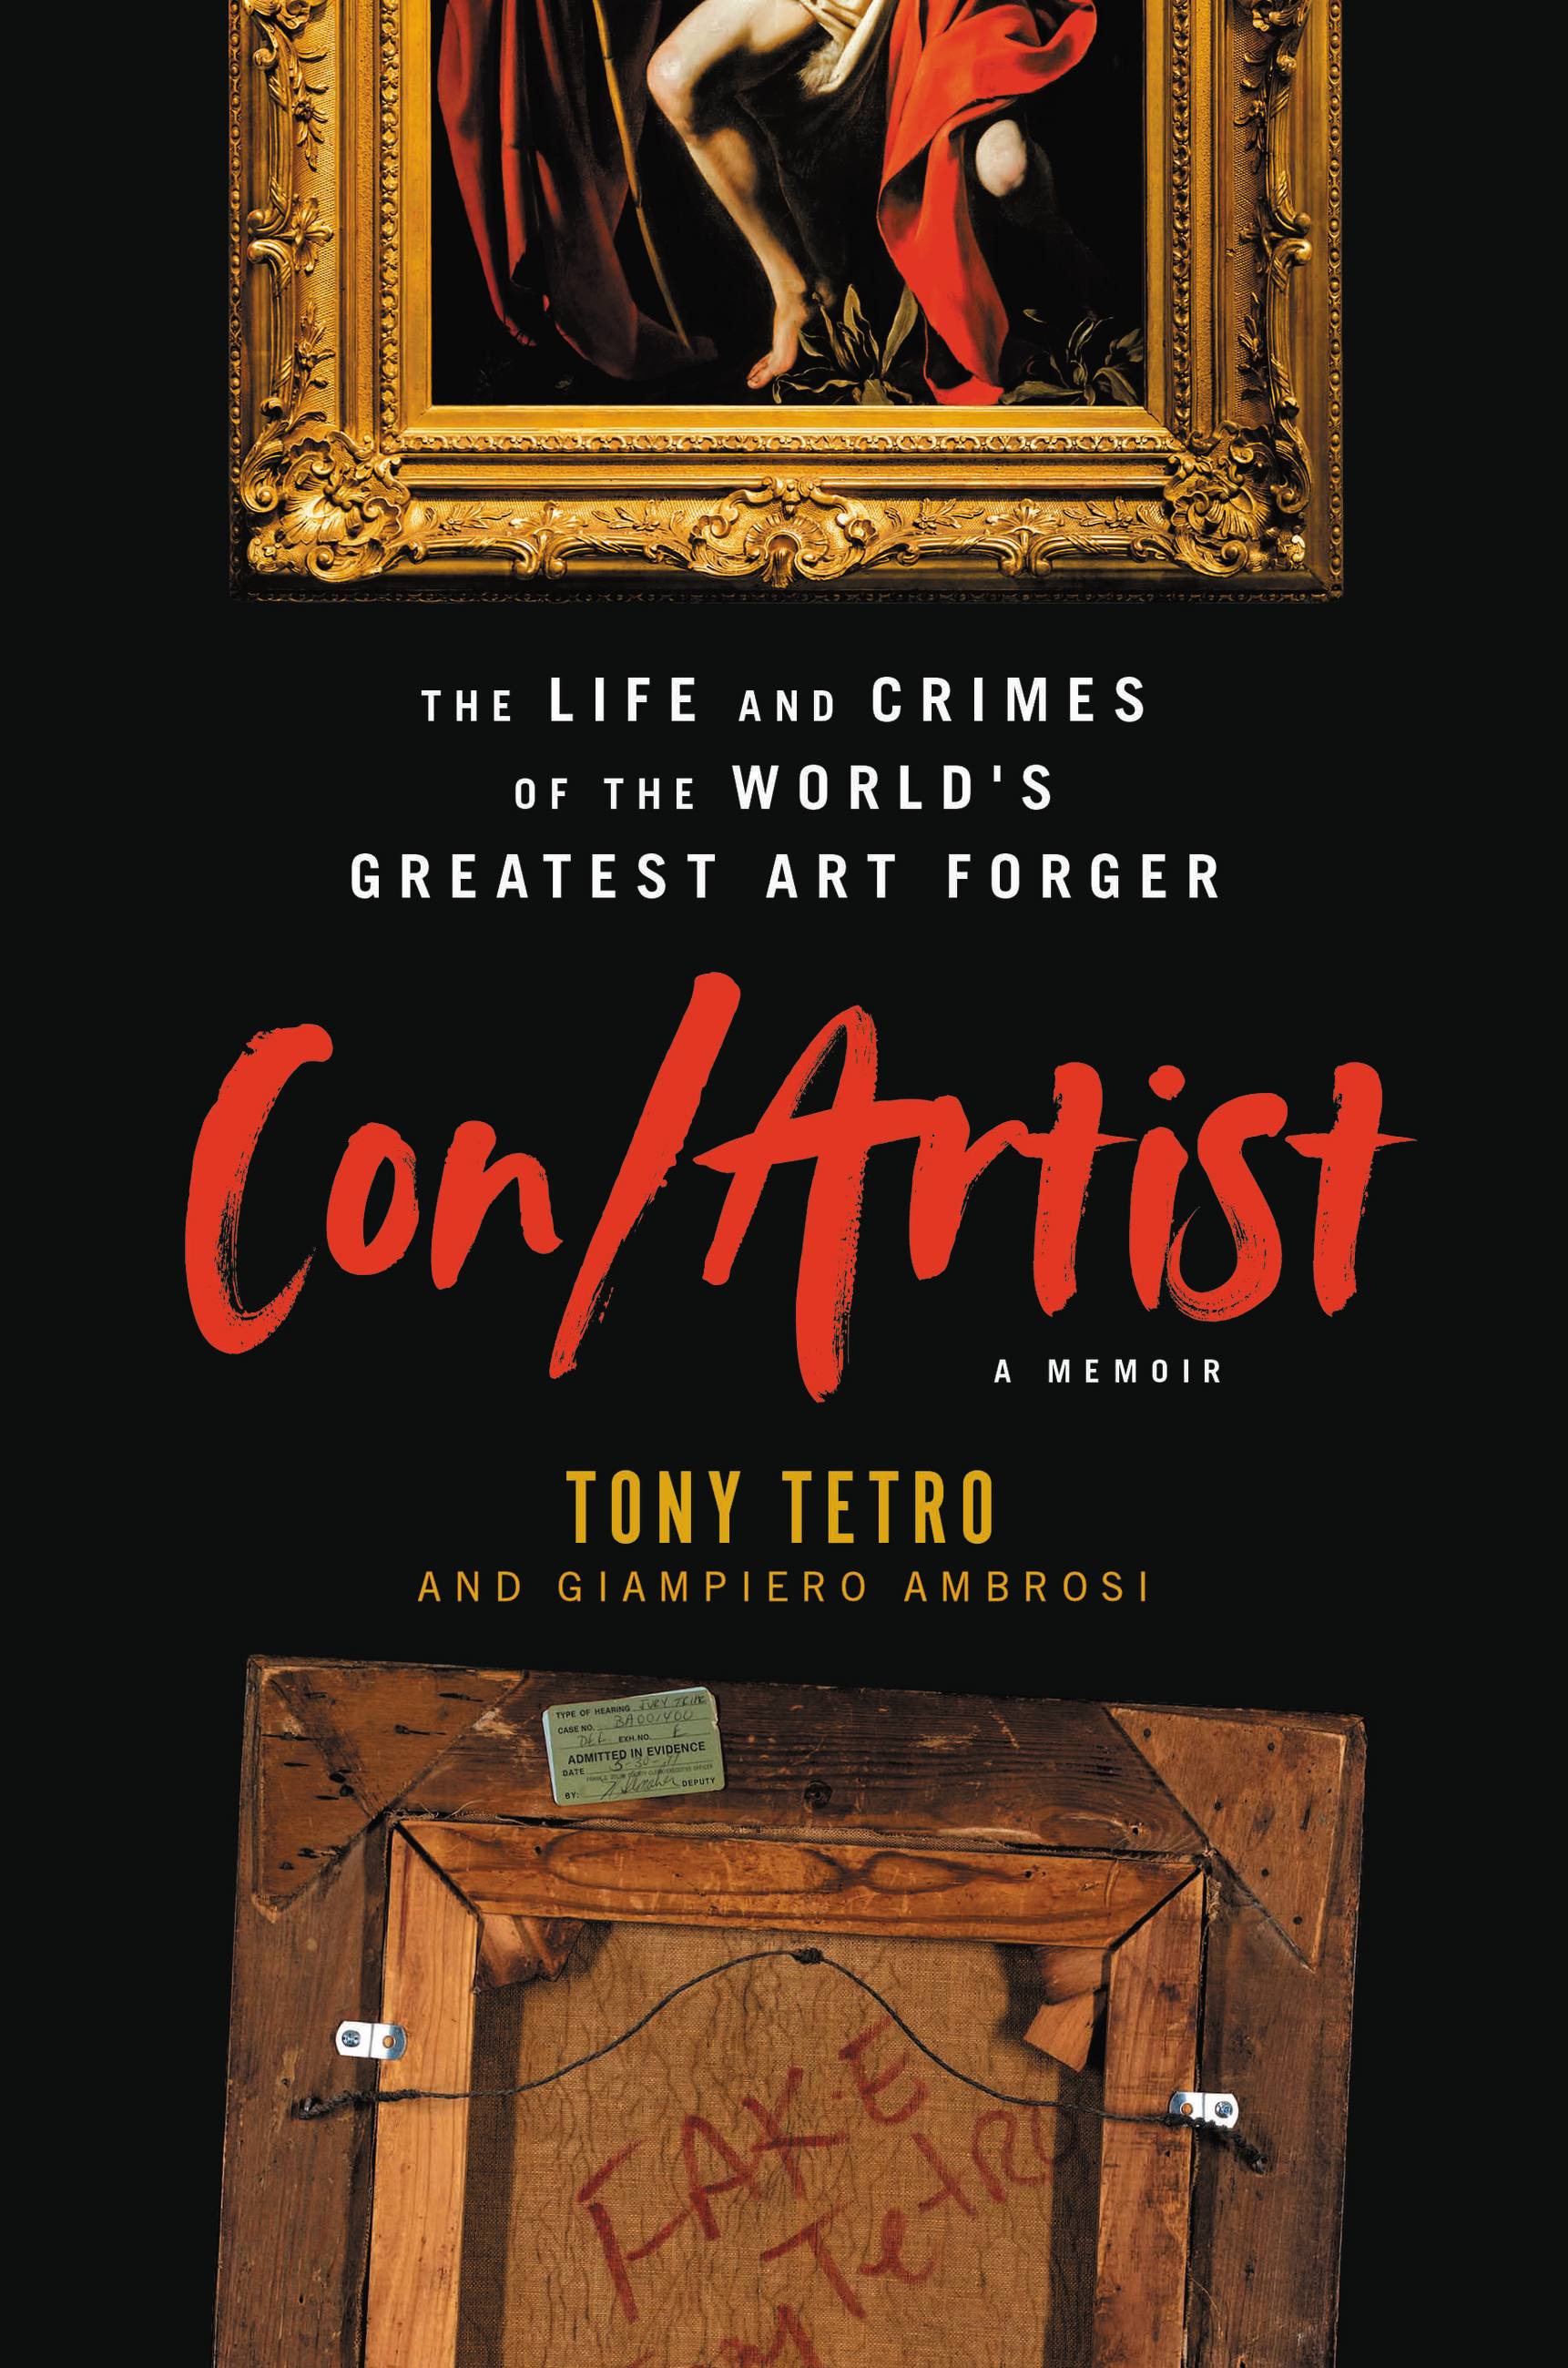 Con/Artist by Tony Tetro | Hachette Book Group